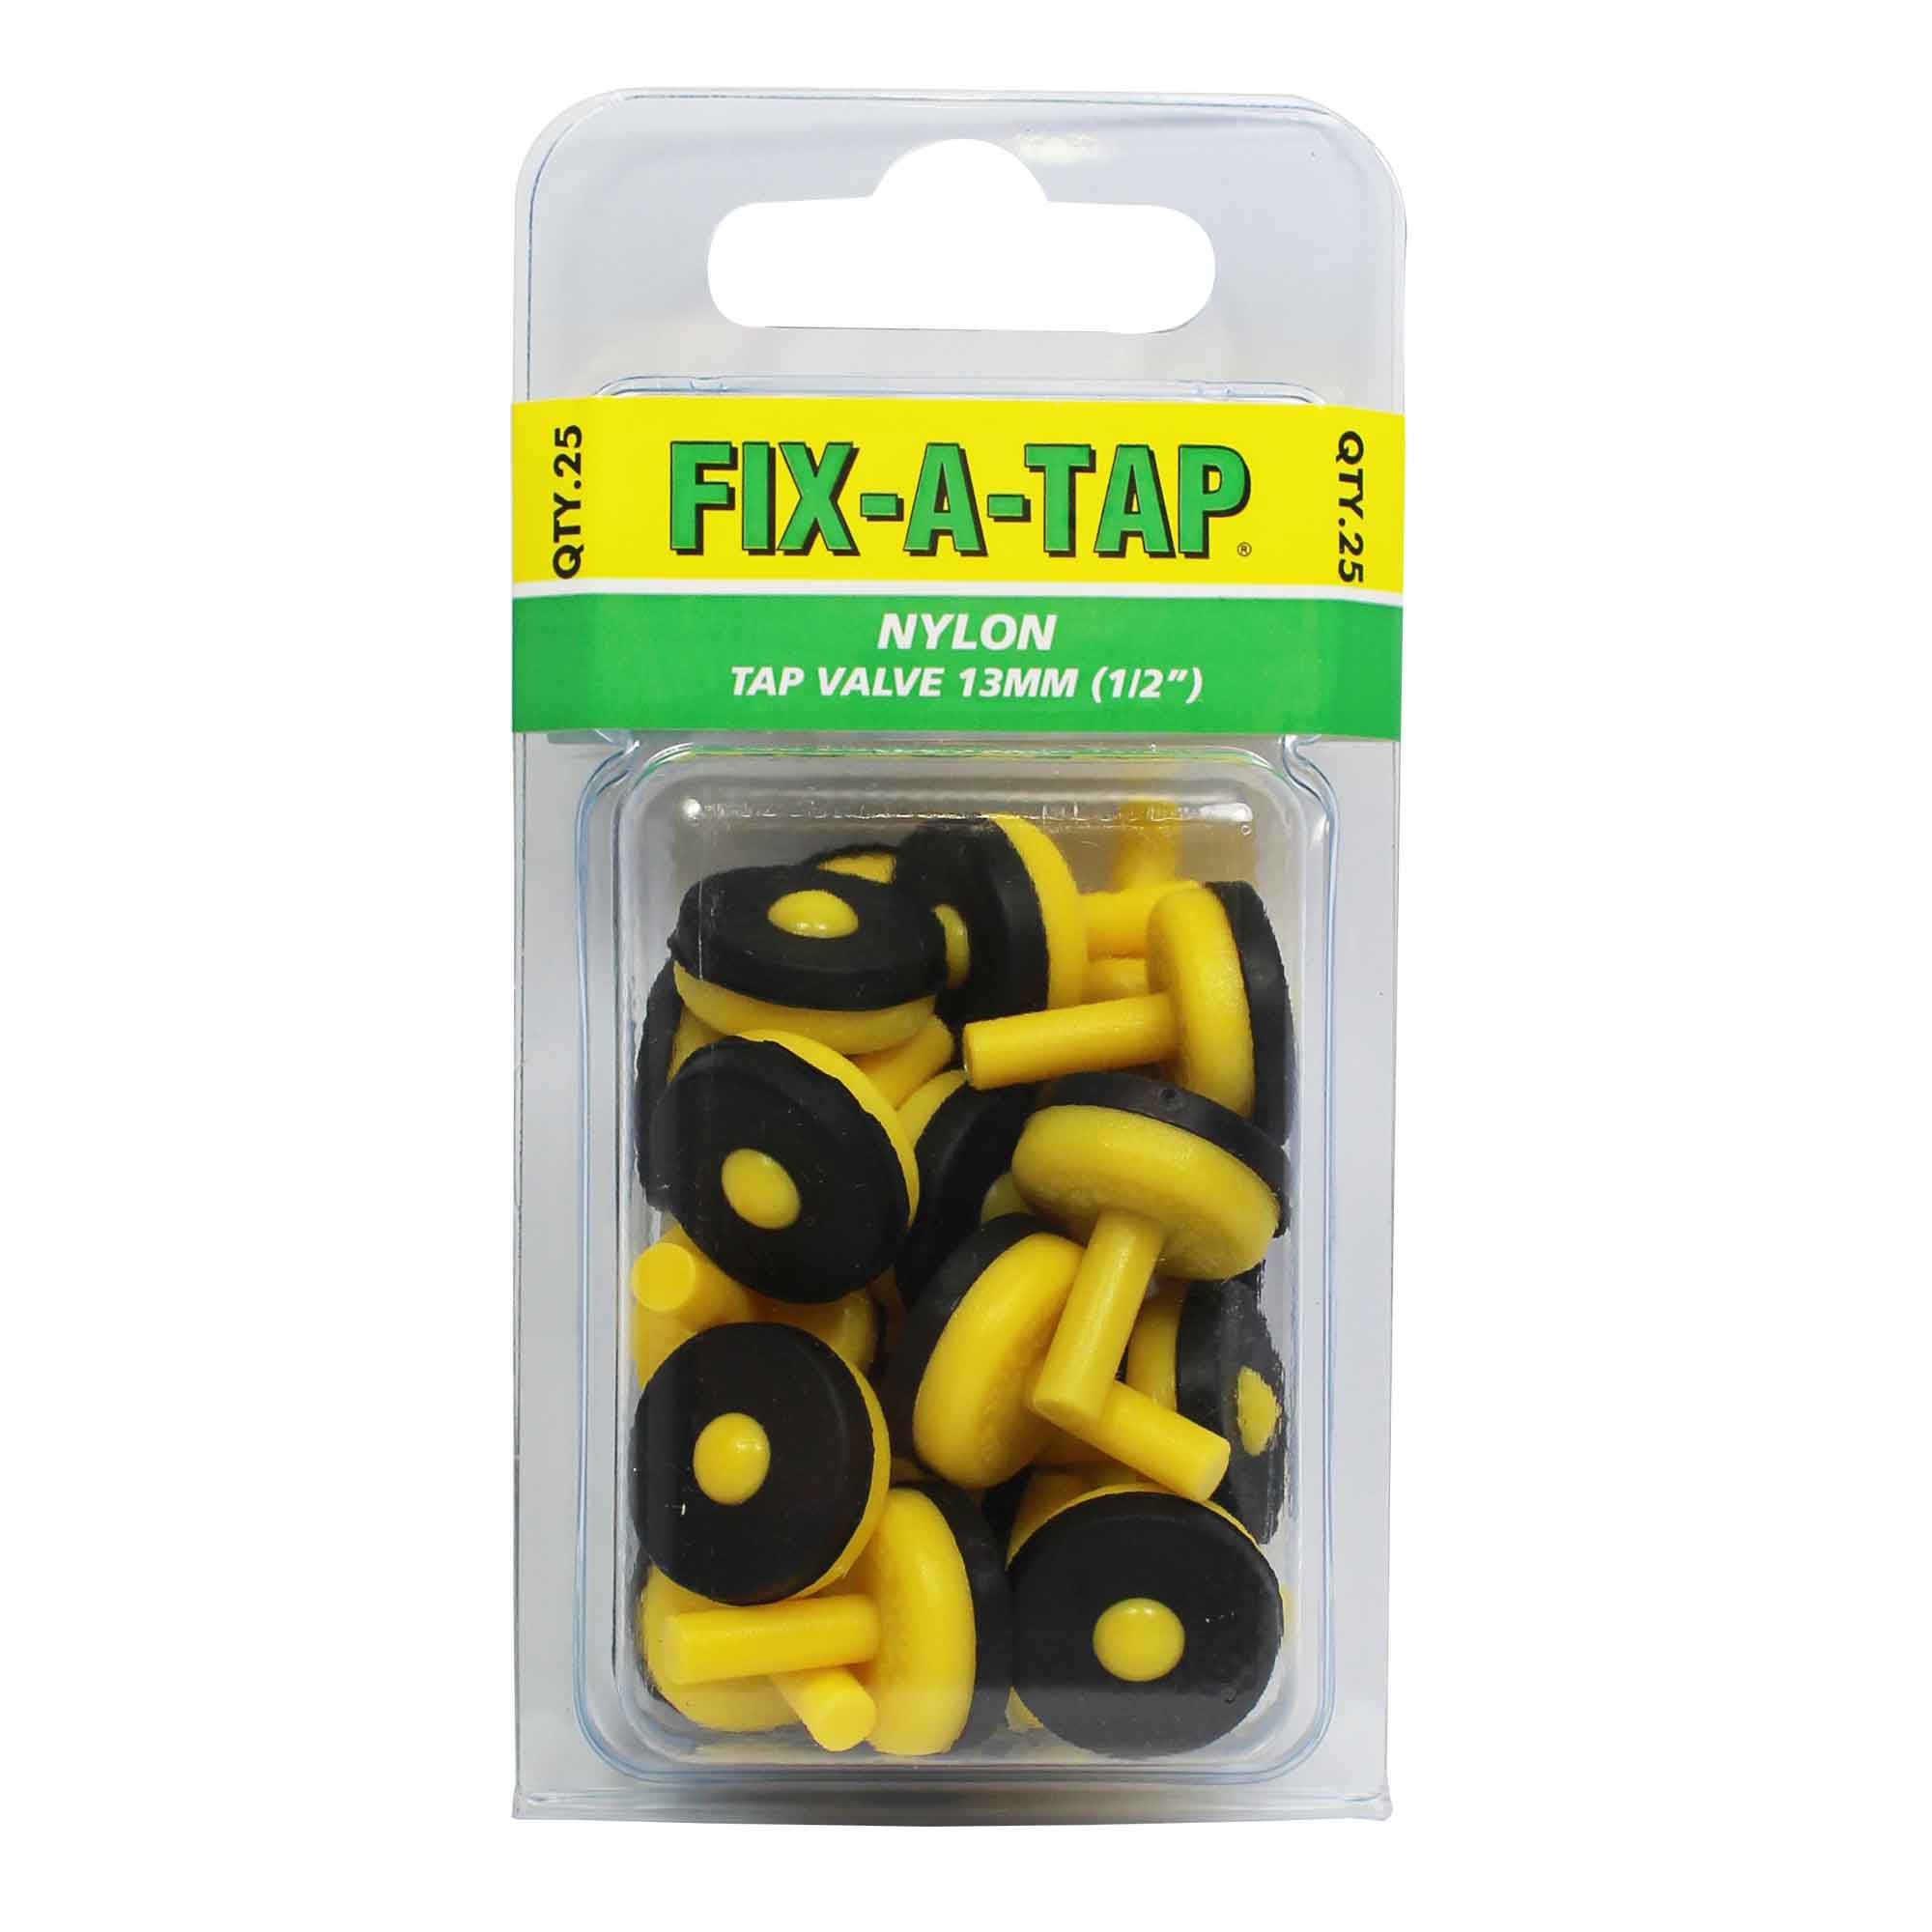 FIX-A-TAP Nylon Tap Valve 13mm (1/2") 261038 - Double Bay Hardware